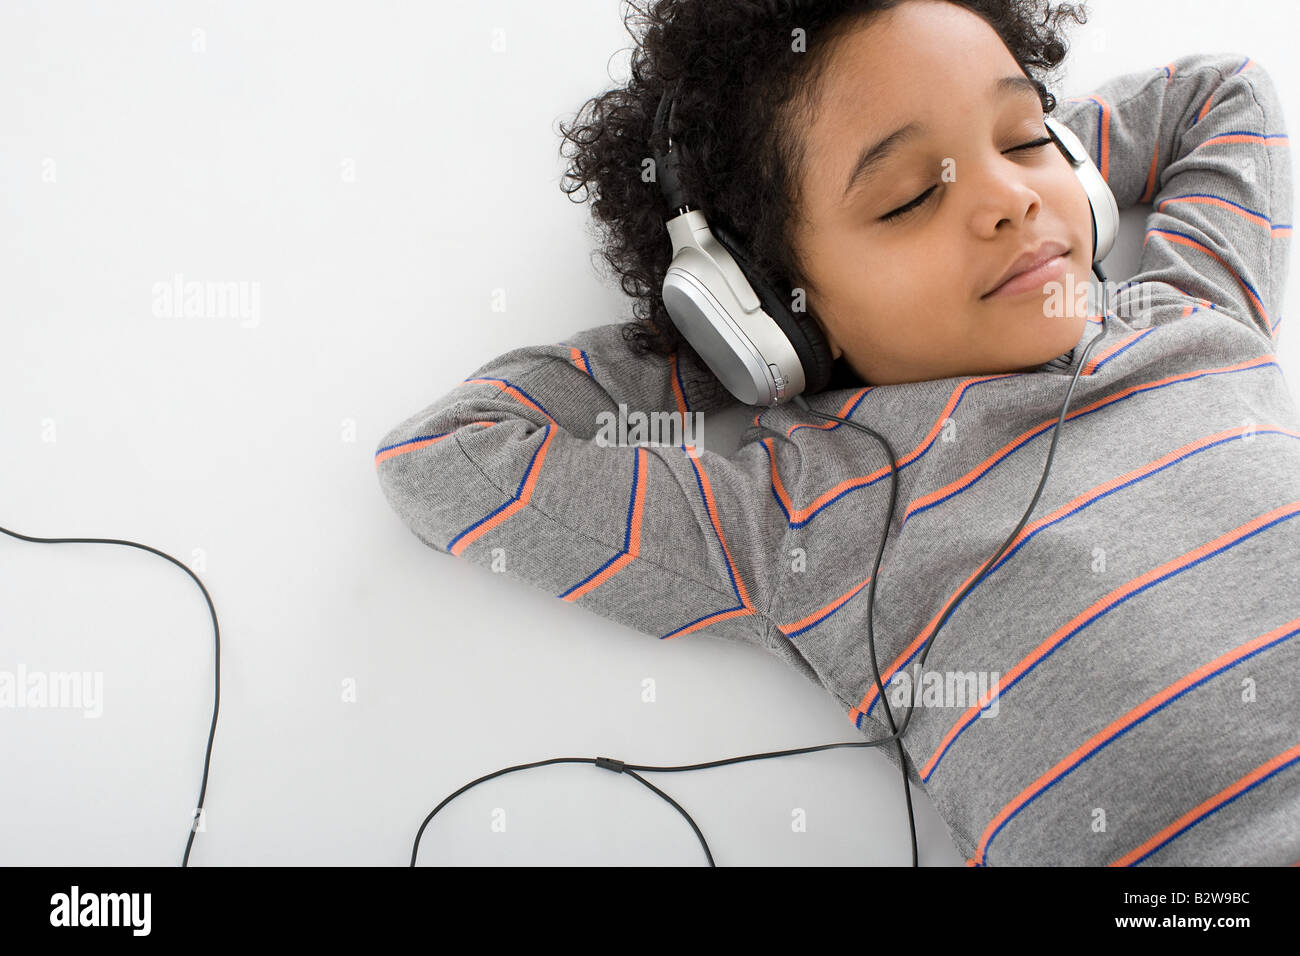 Boy listening to music Stock Photo